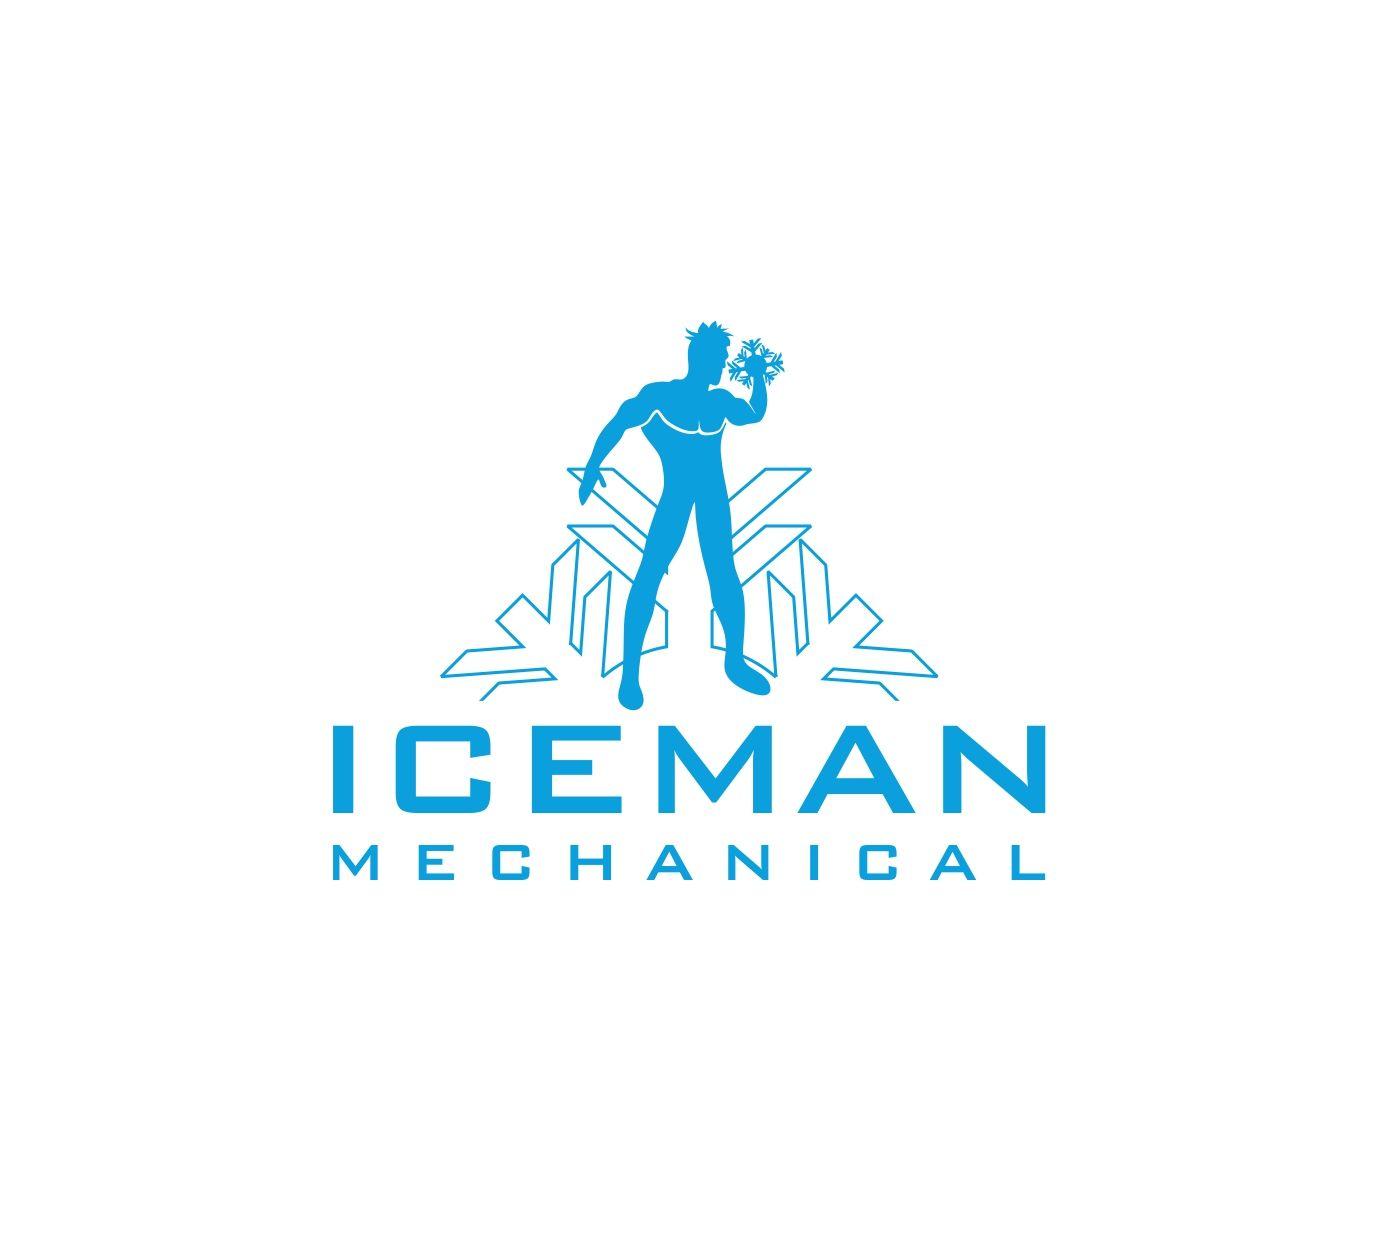 Iceman Logo - Masculine, Bold, Hvac Logo Design for Iceman Mechanical by Mstudios ...